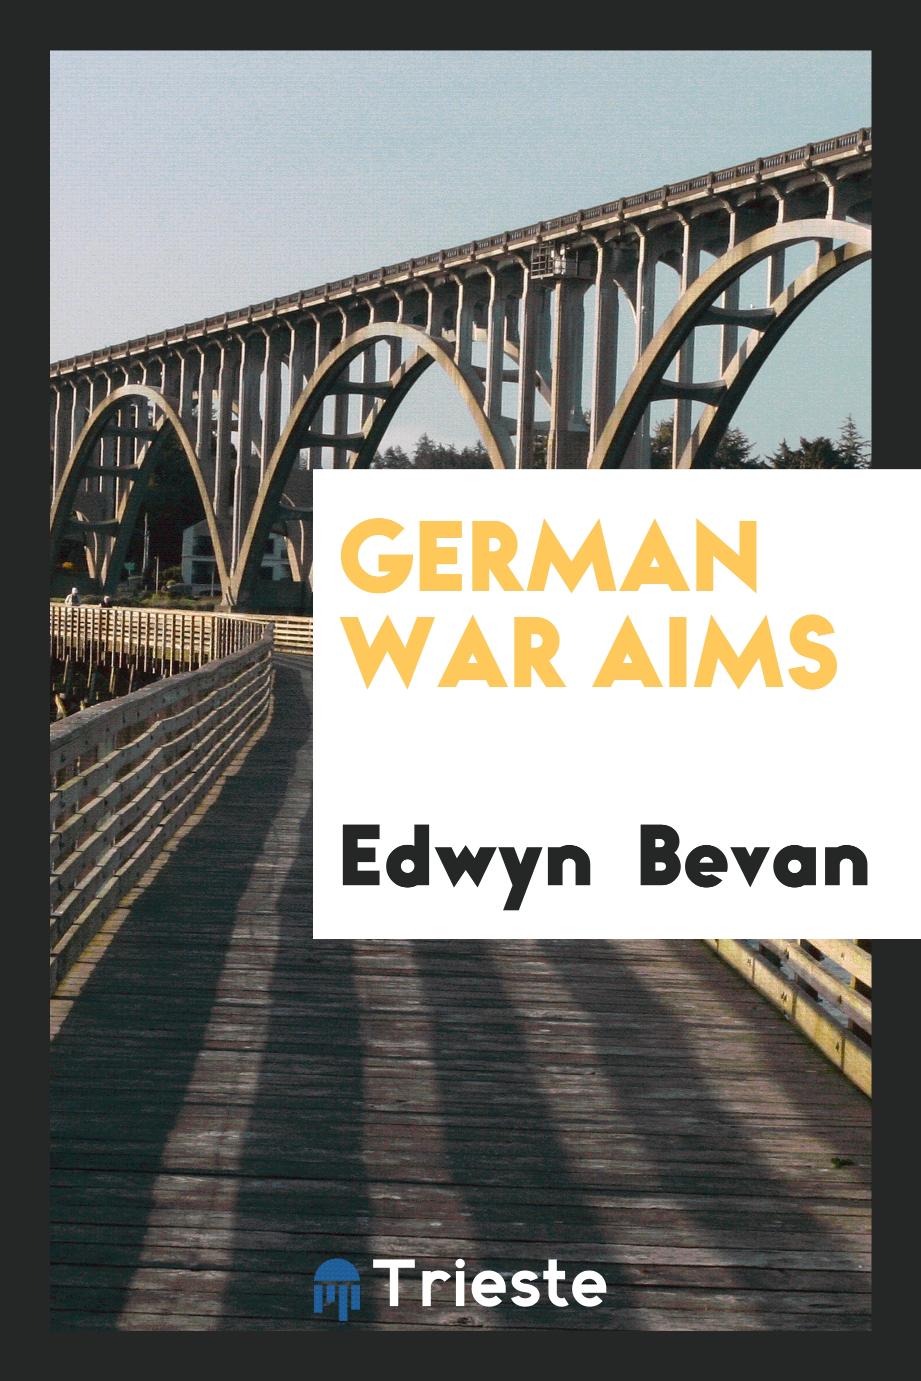 German War Aims